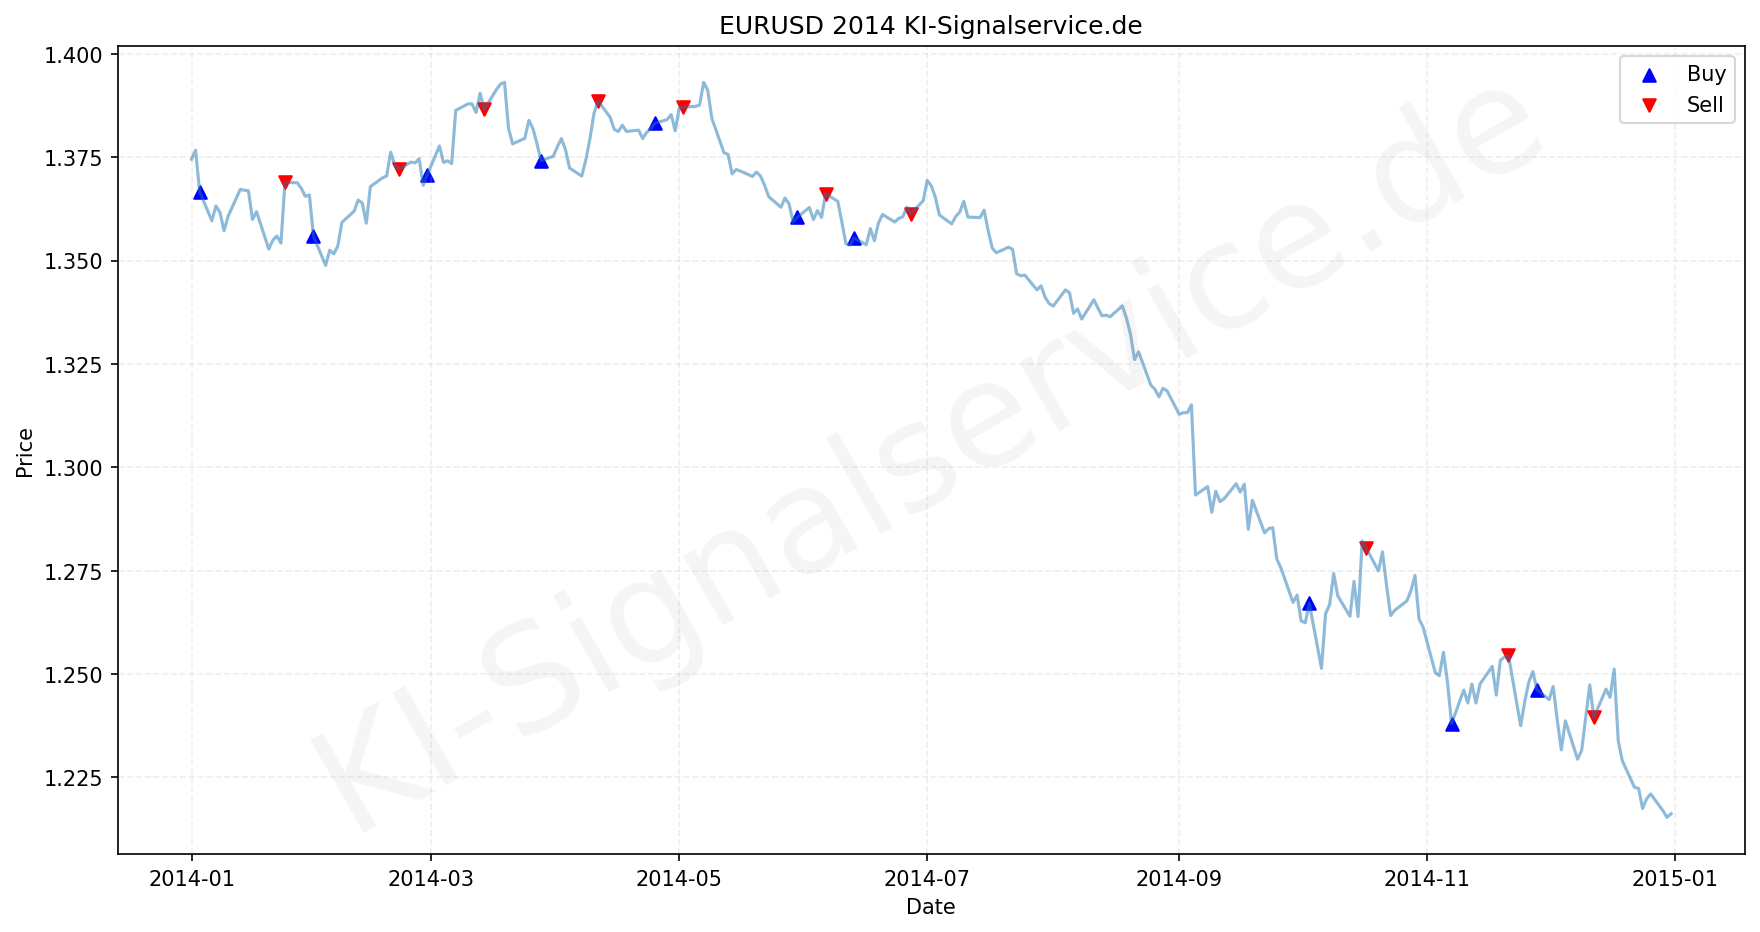 EURUSD Chart - KI Tradingsignale 2014